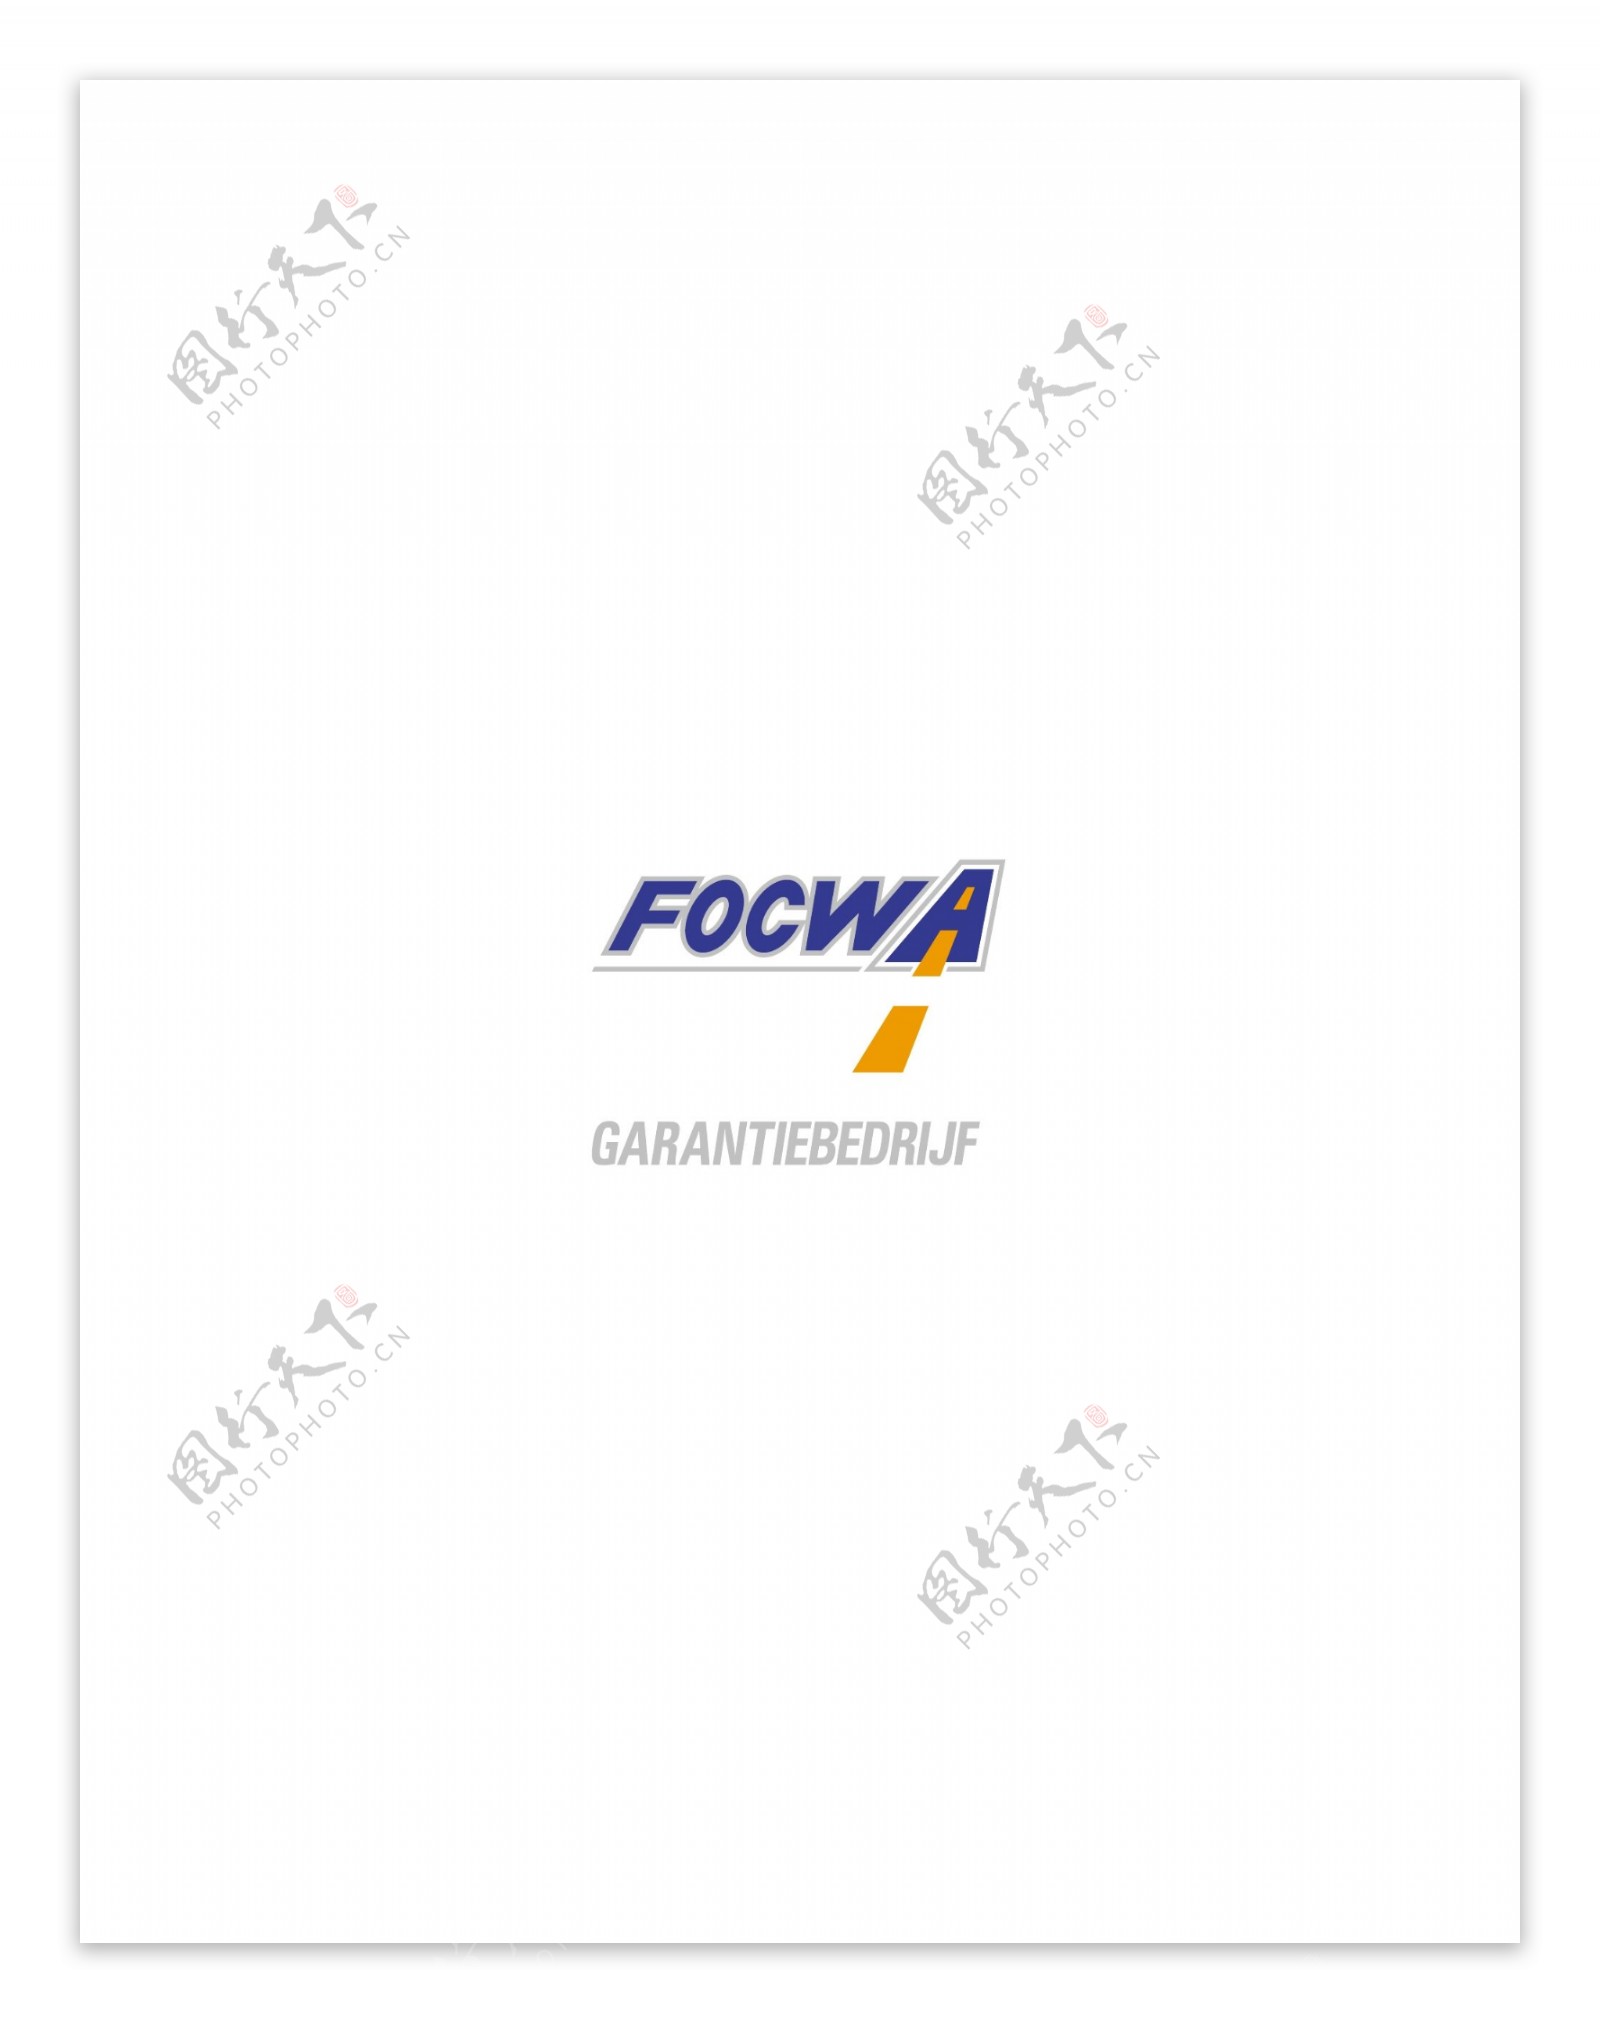 Focwalogo设计欣赏Focwa矢量名车标志下载标志设计欣赏